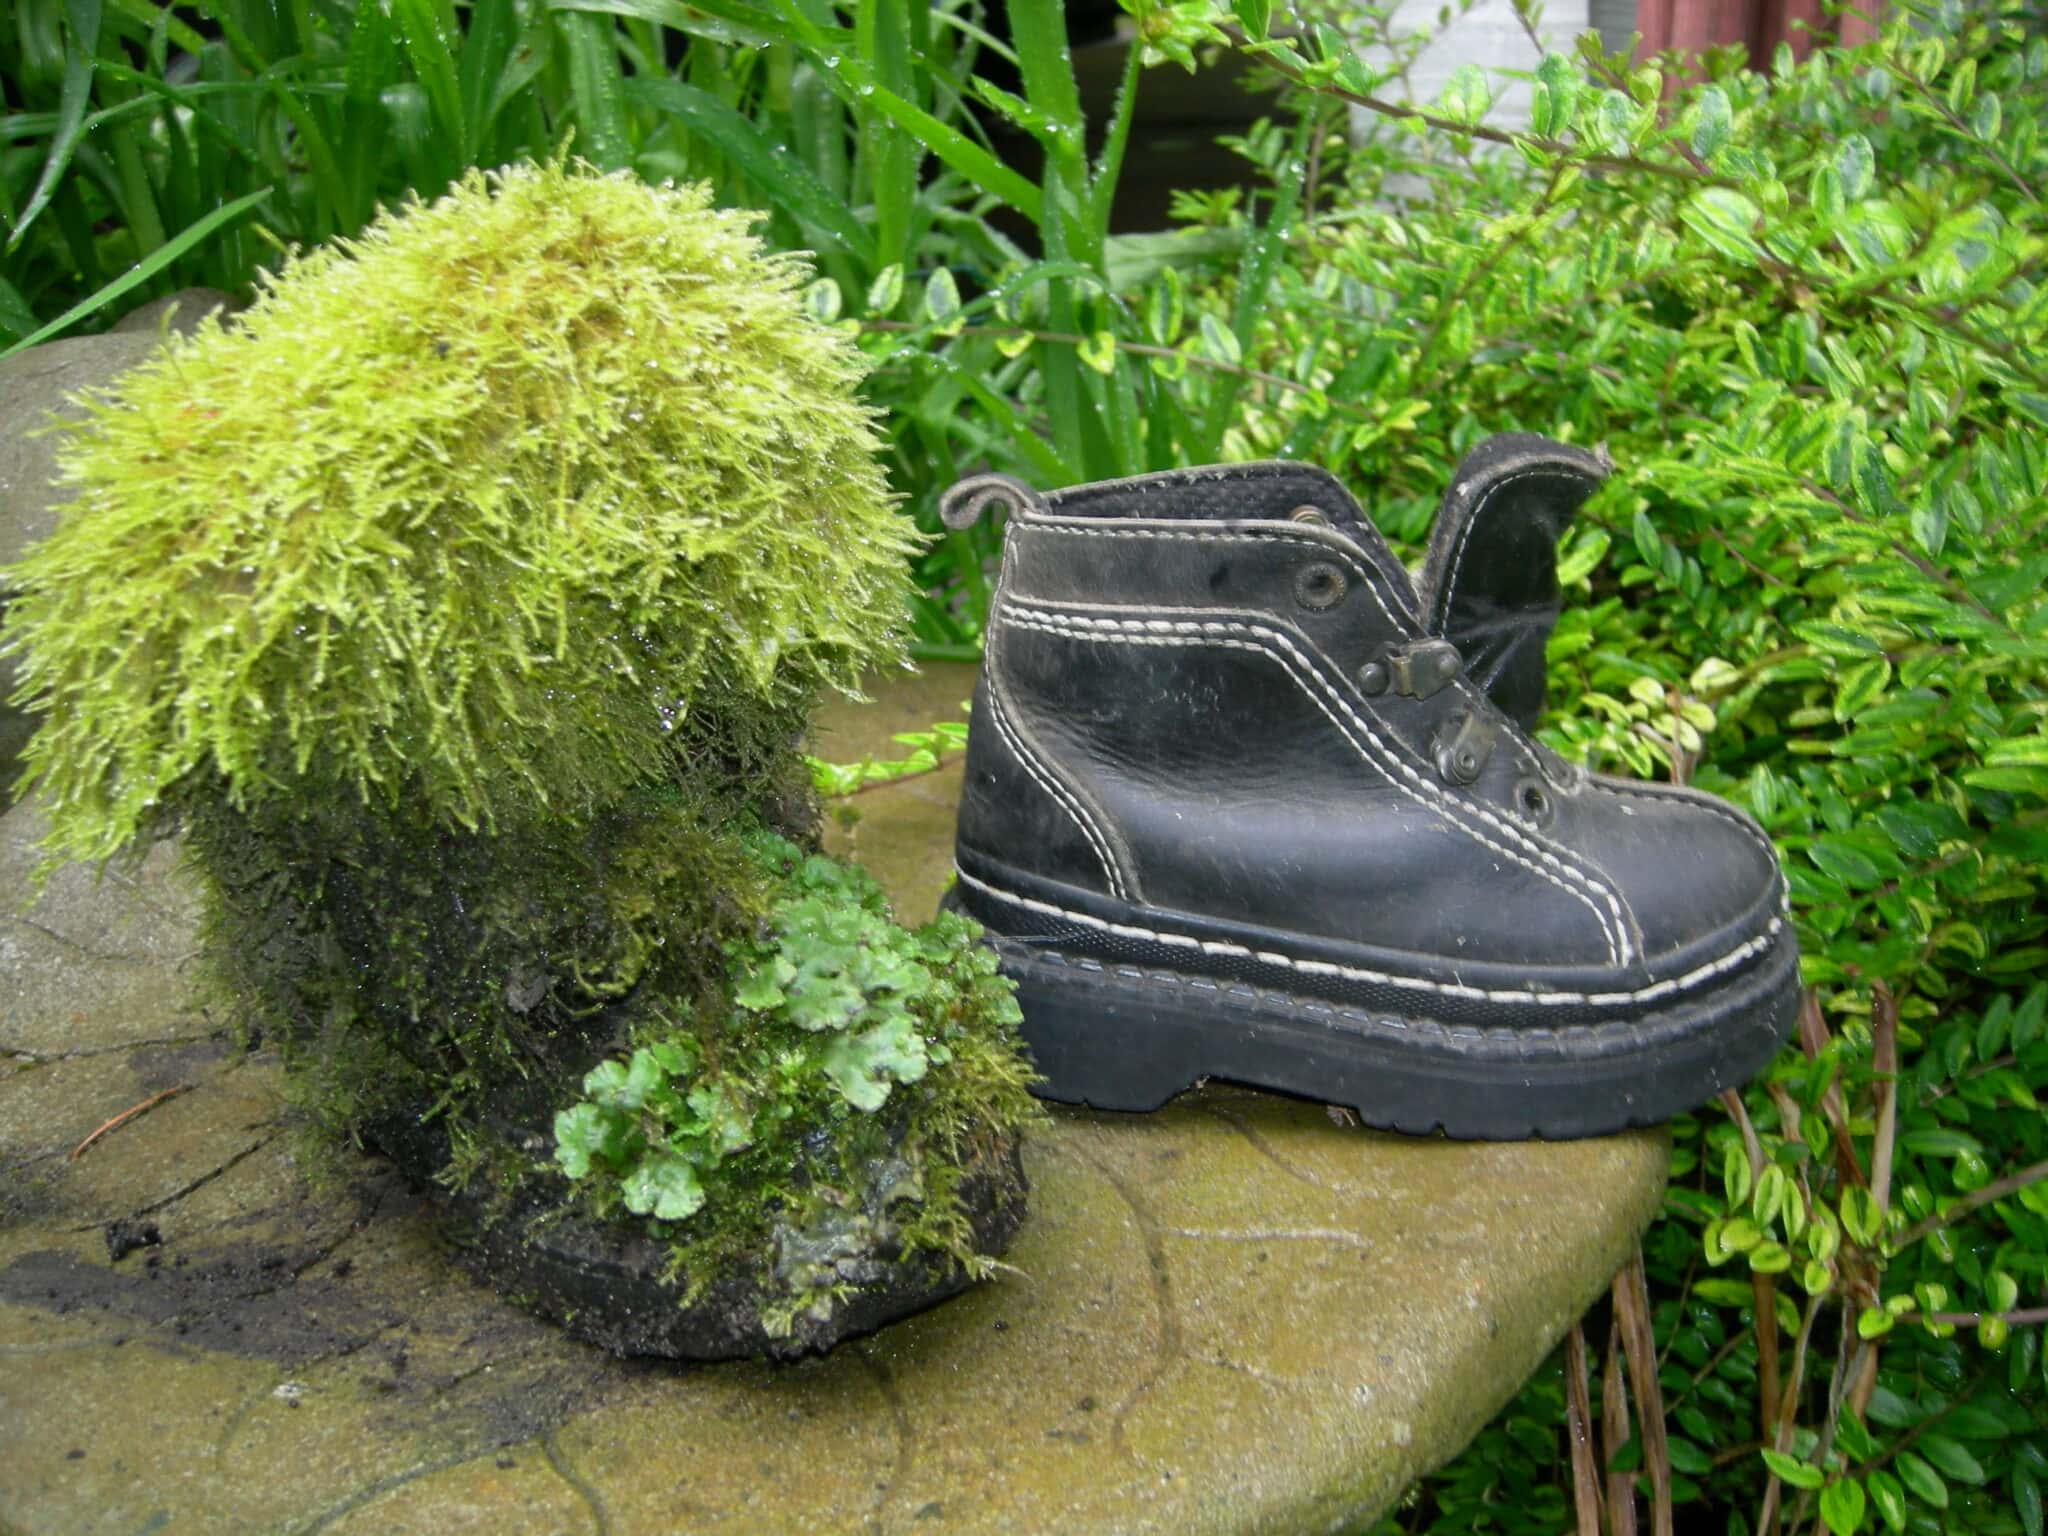 Recycling Old Shoes For Garden Art Make A Keepsake For Your Garden